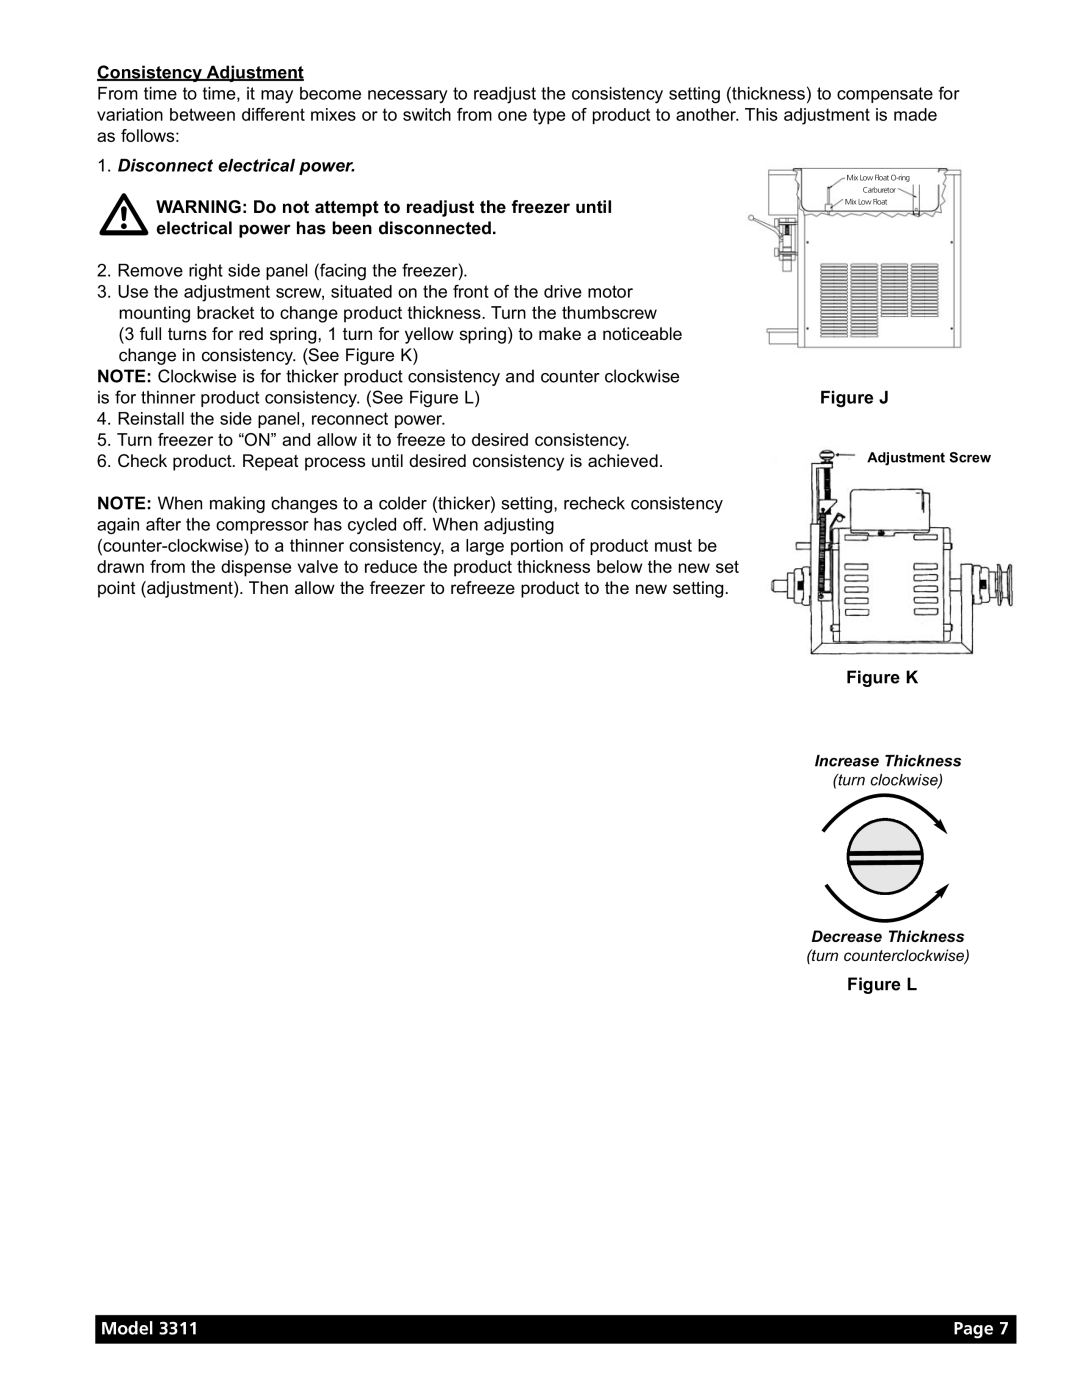 Grindmaster Model 3311 manual Consistency Adjustment, Disconnect electrical power, Figure J, Figure K, Figure L, Page 